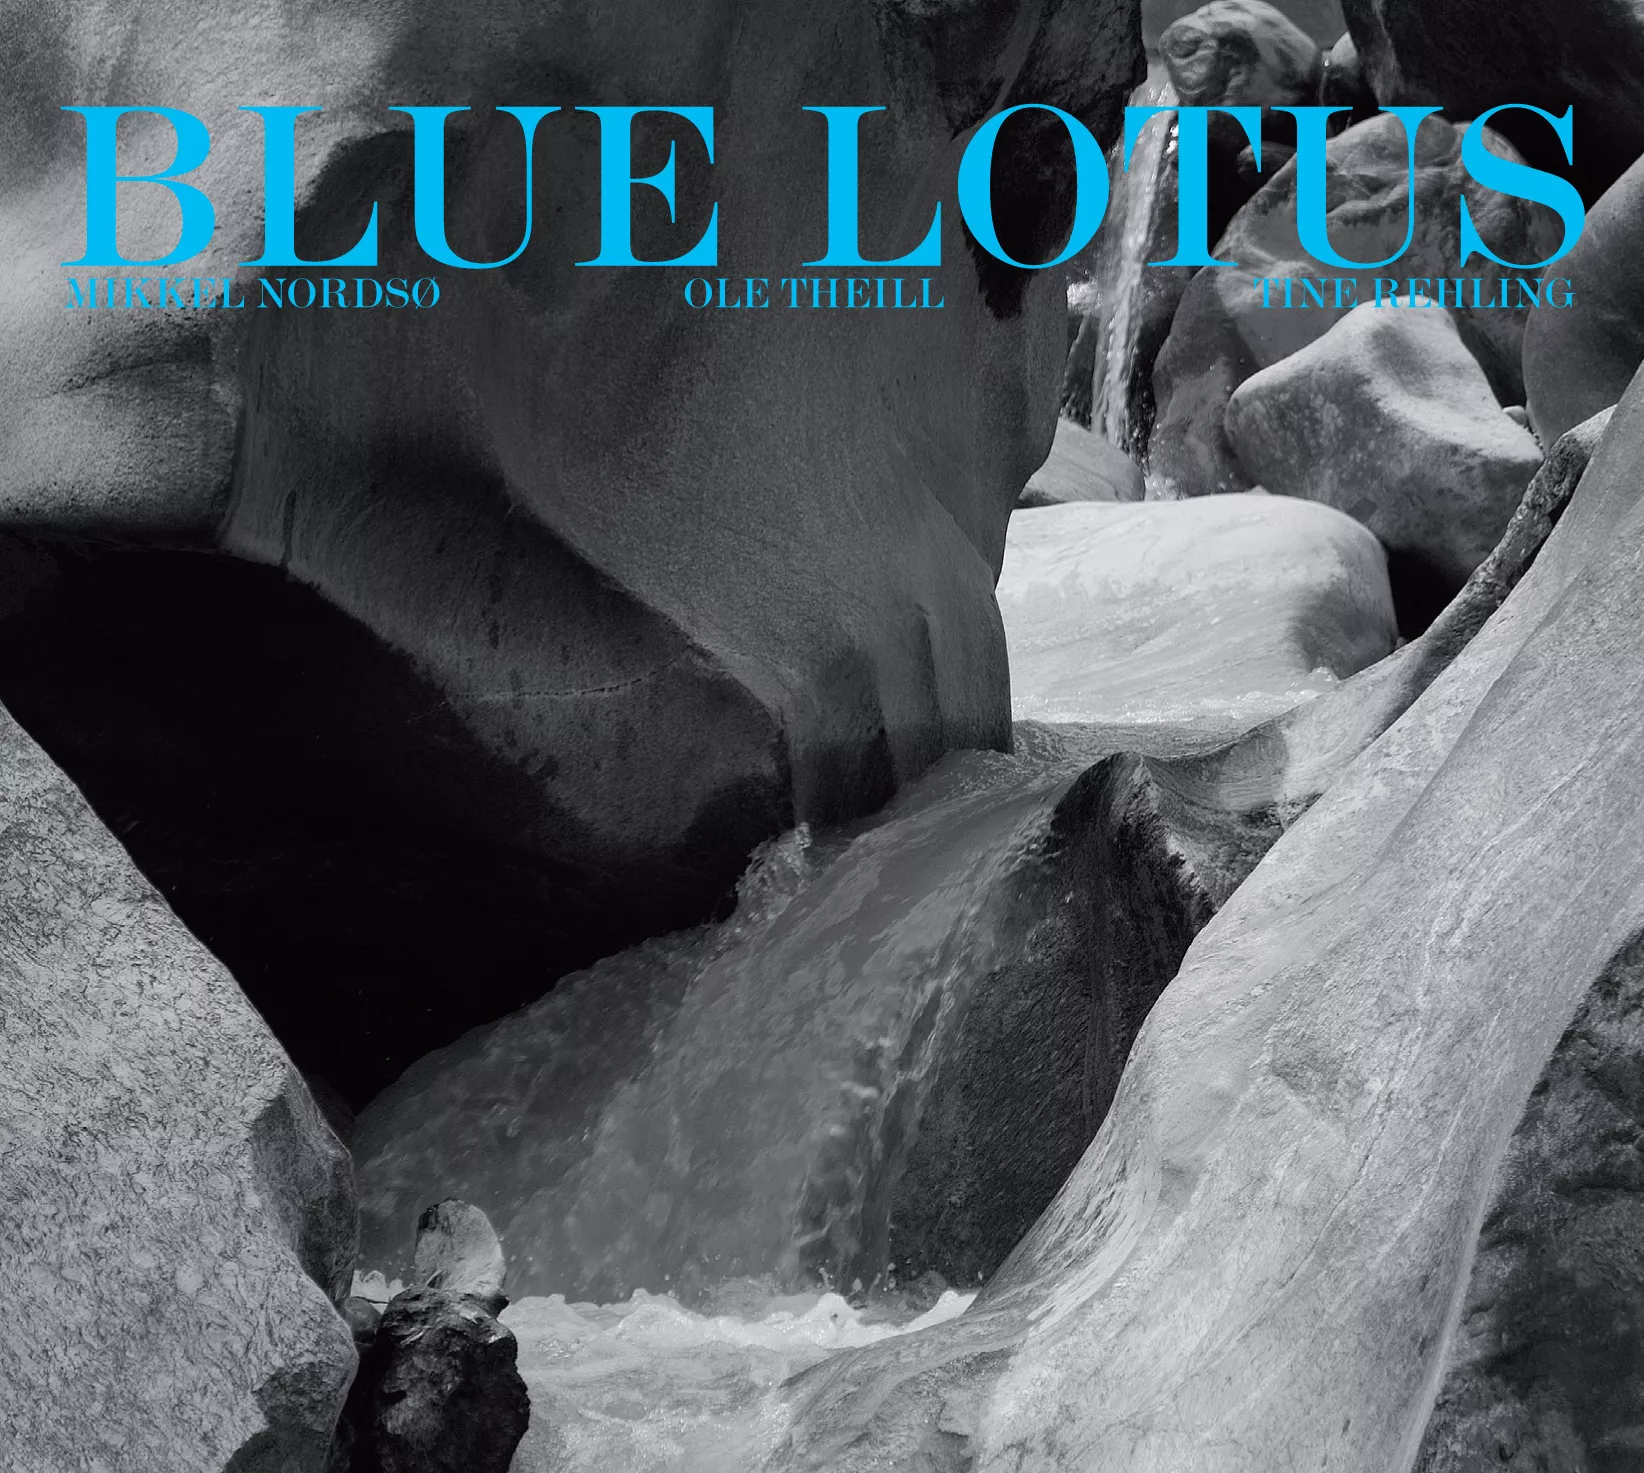 Blue Lotus - Mikkel Nordsø / Ole Theill / Tine Reiiling